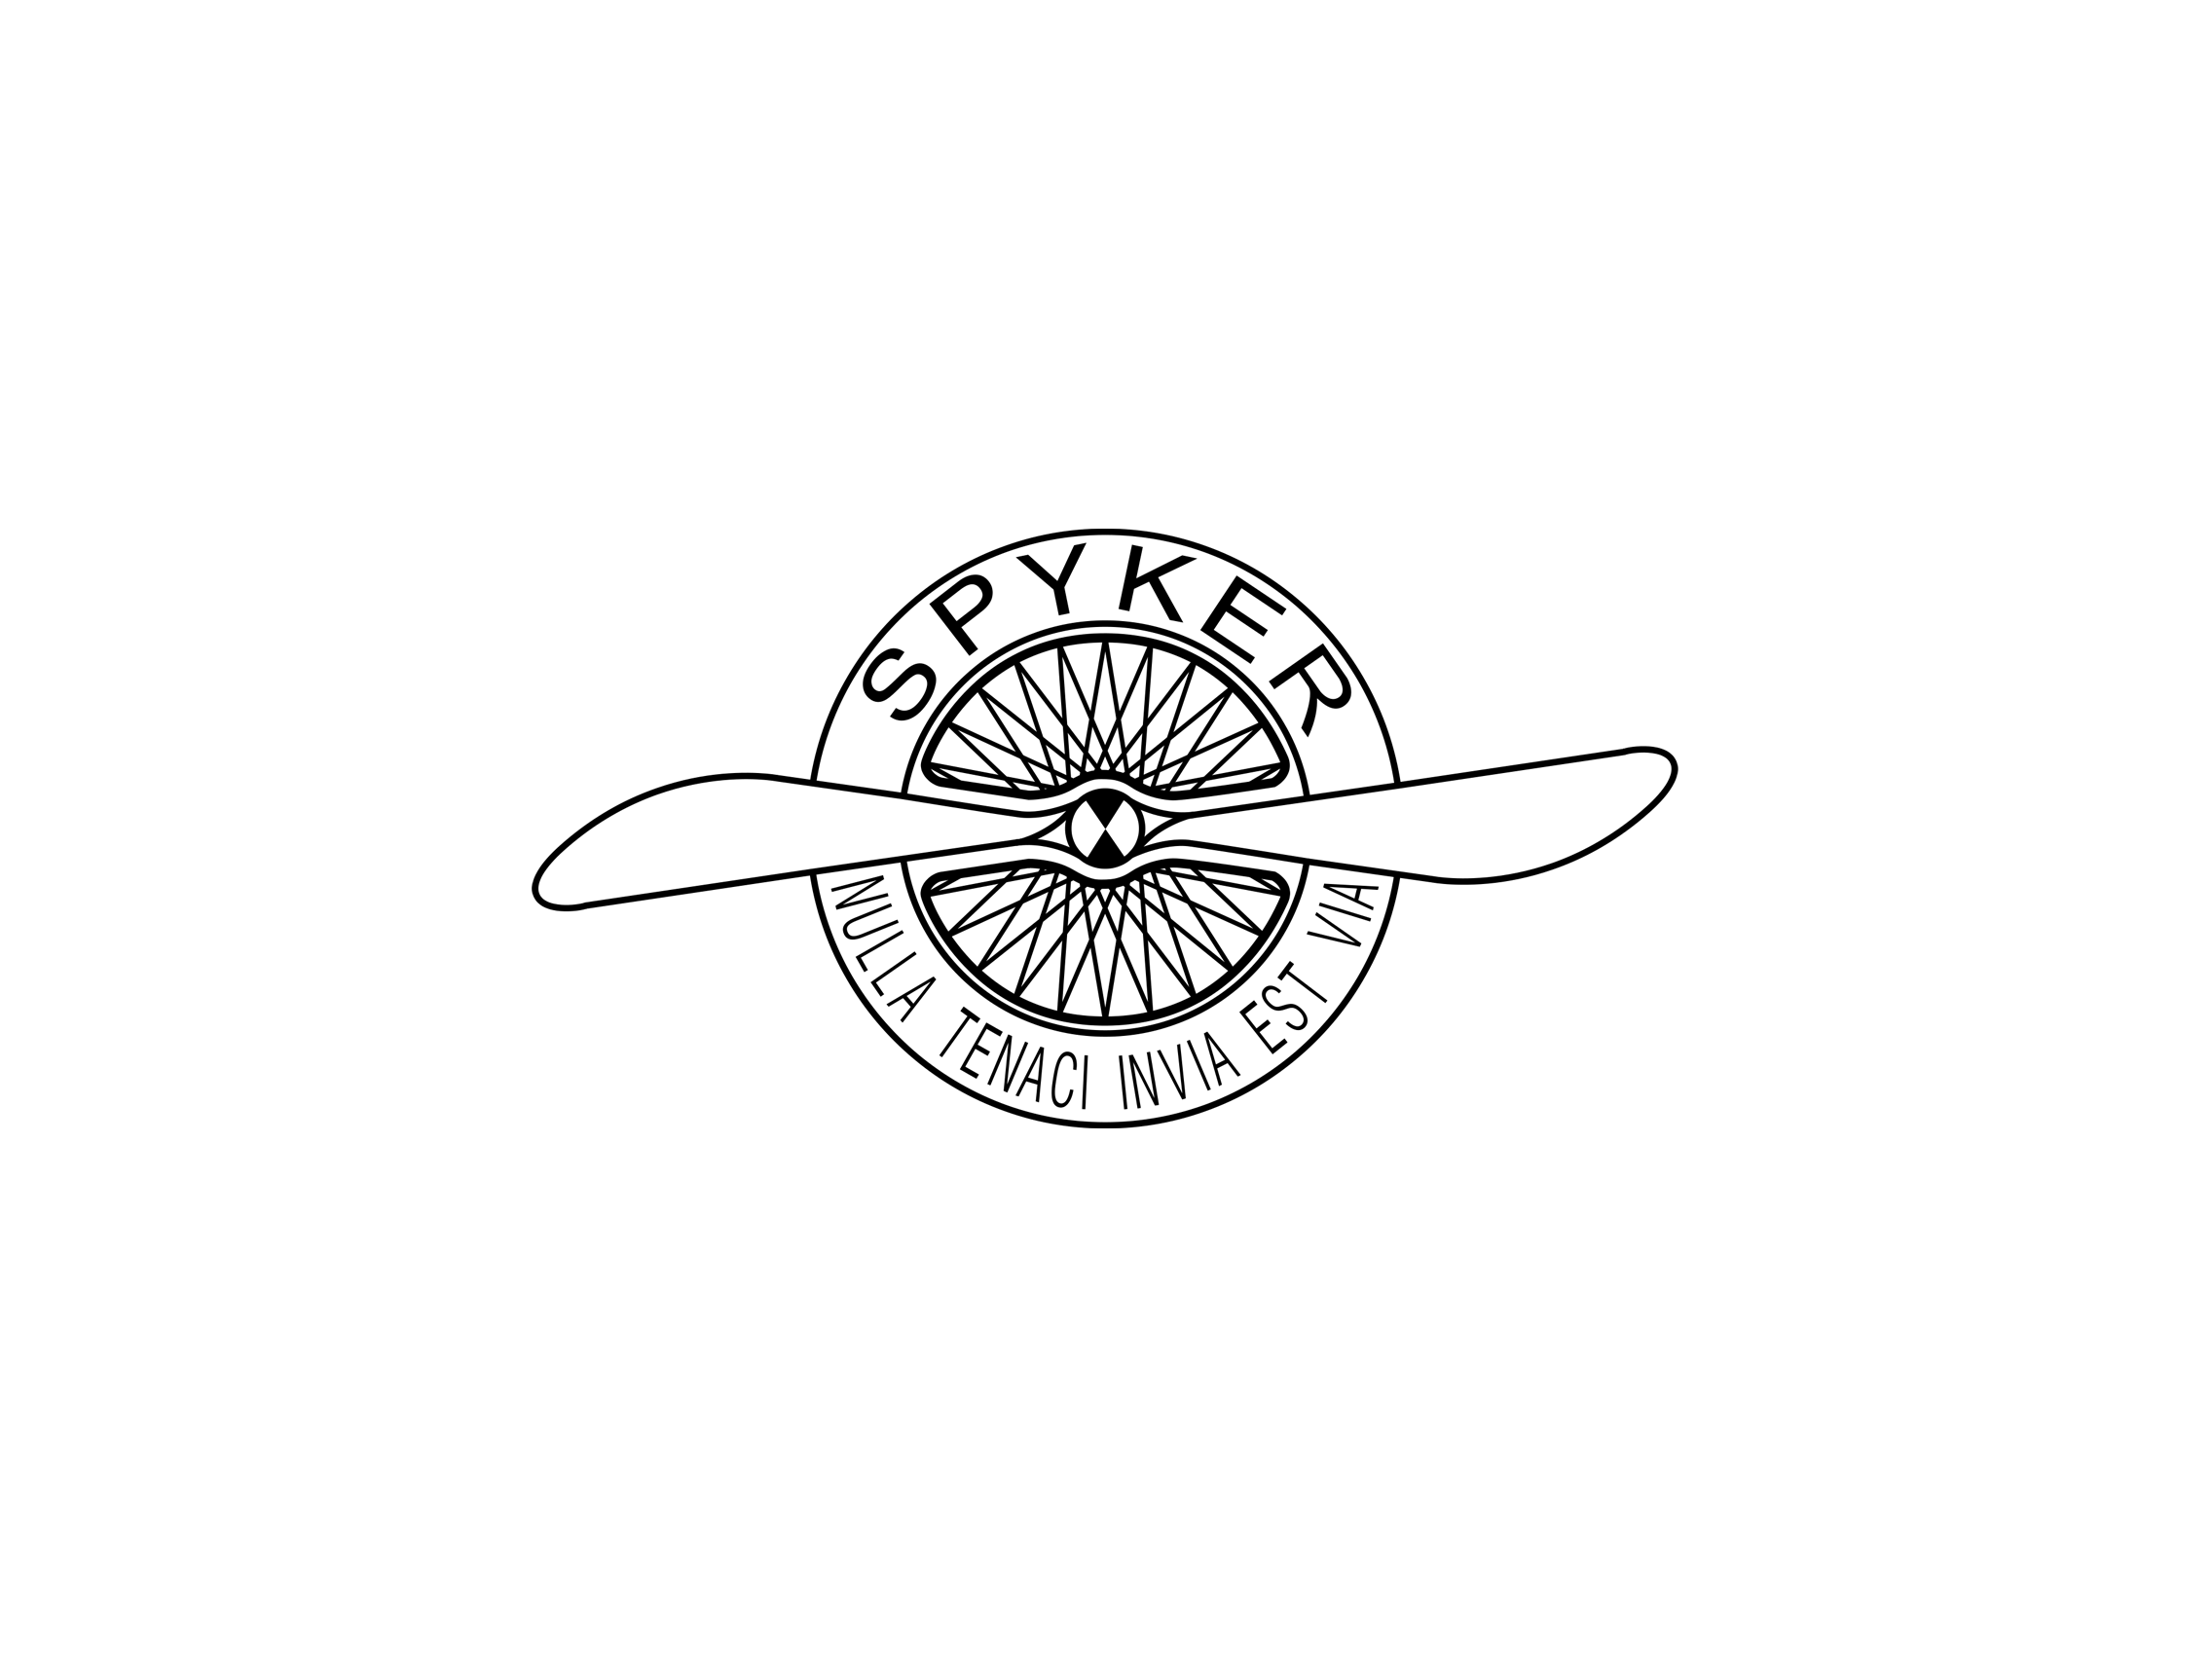 Spyker Logo - Spyker Cars logo - Logok